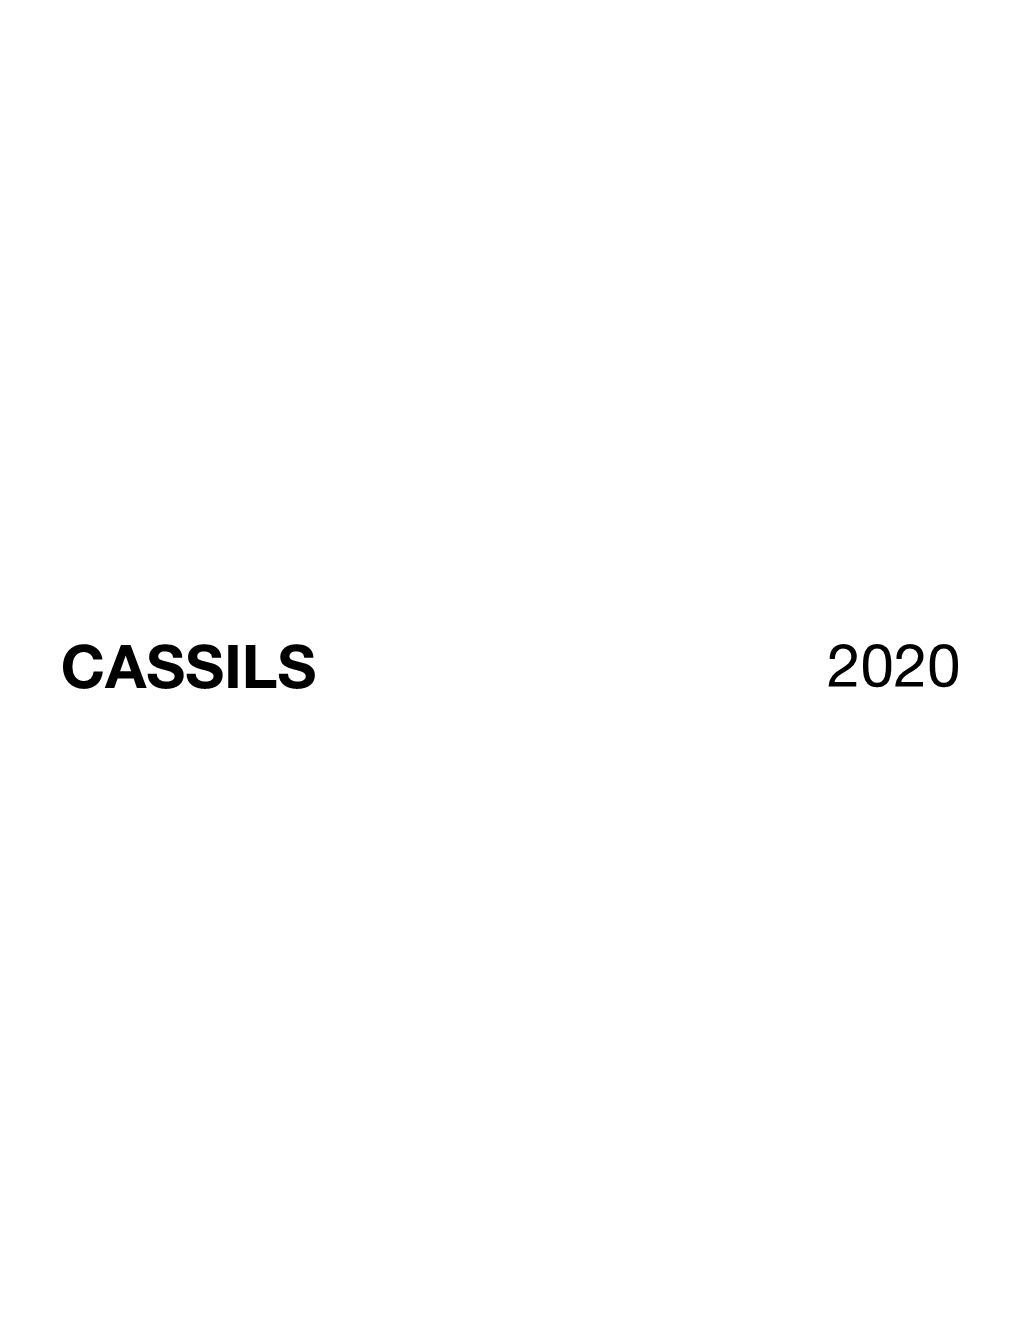 Cassils 2020 Cassils 2020 Short Bio